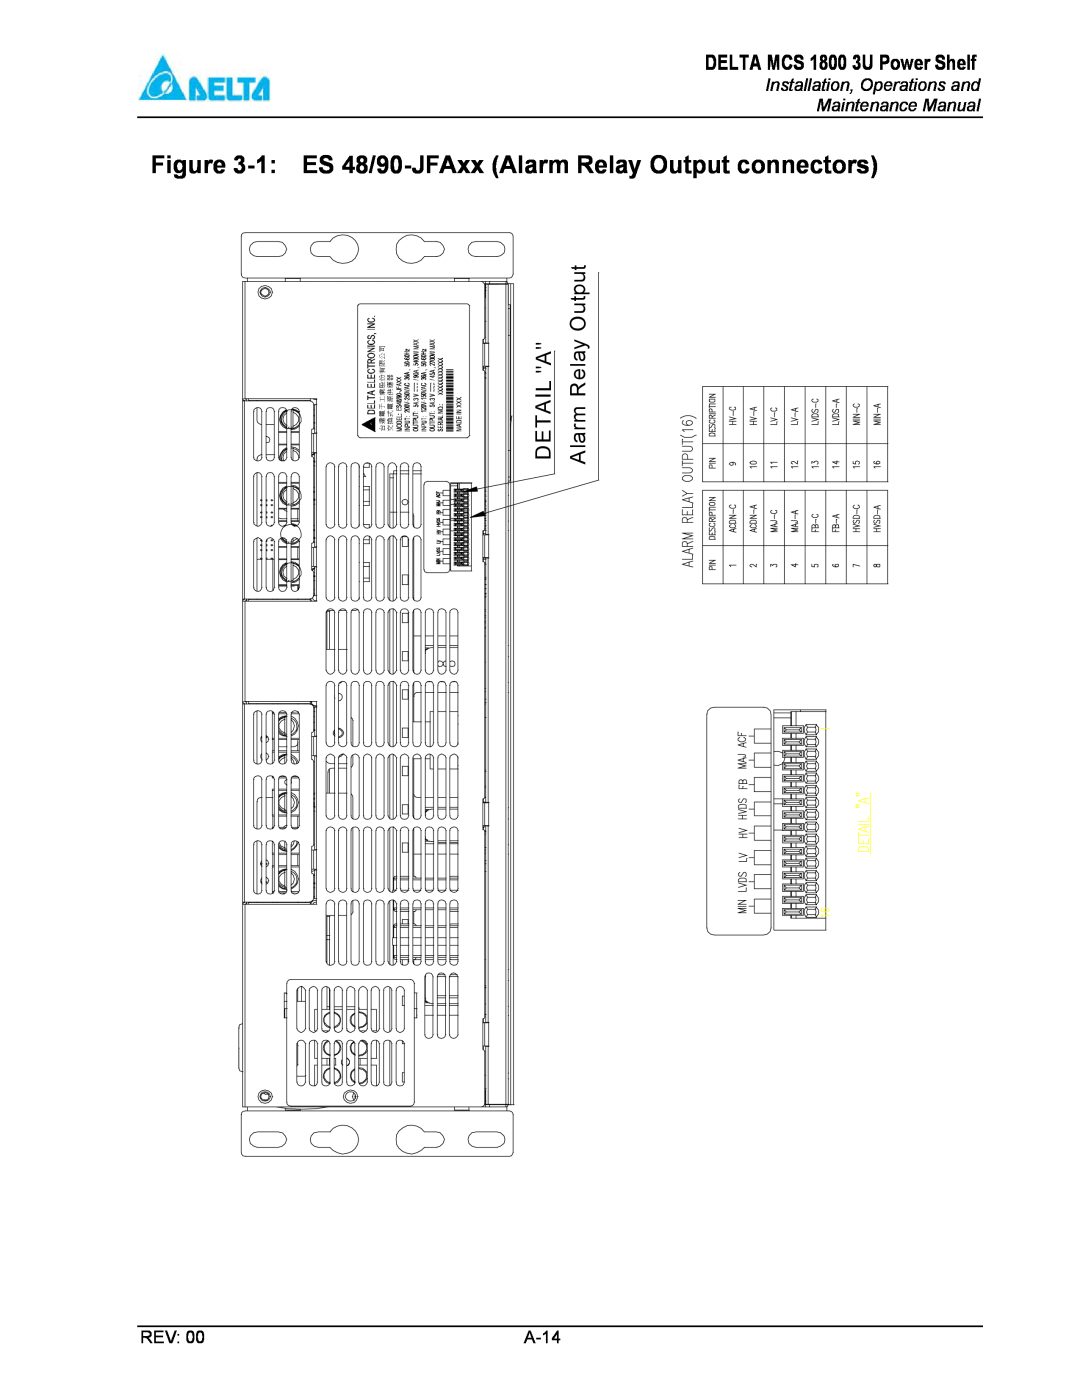 Delta MCS-1800 1 ES 48/90-JFAxx Alarm Relay Output connectors, DELTA MCS 1800 3U Power Shelf, DETAIL A Alarm Relay Output 